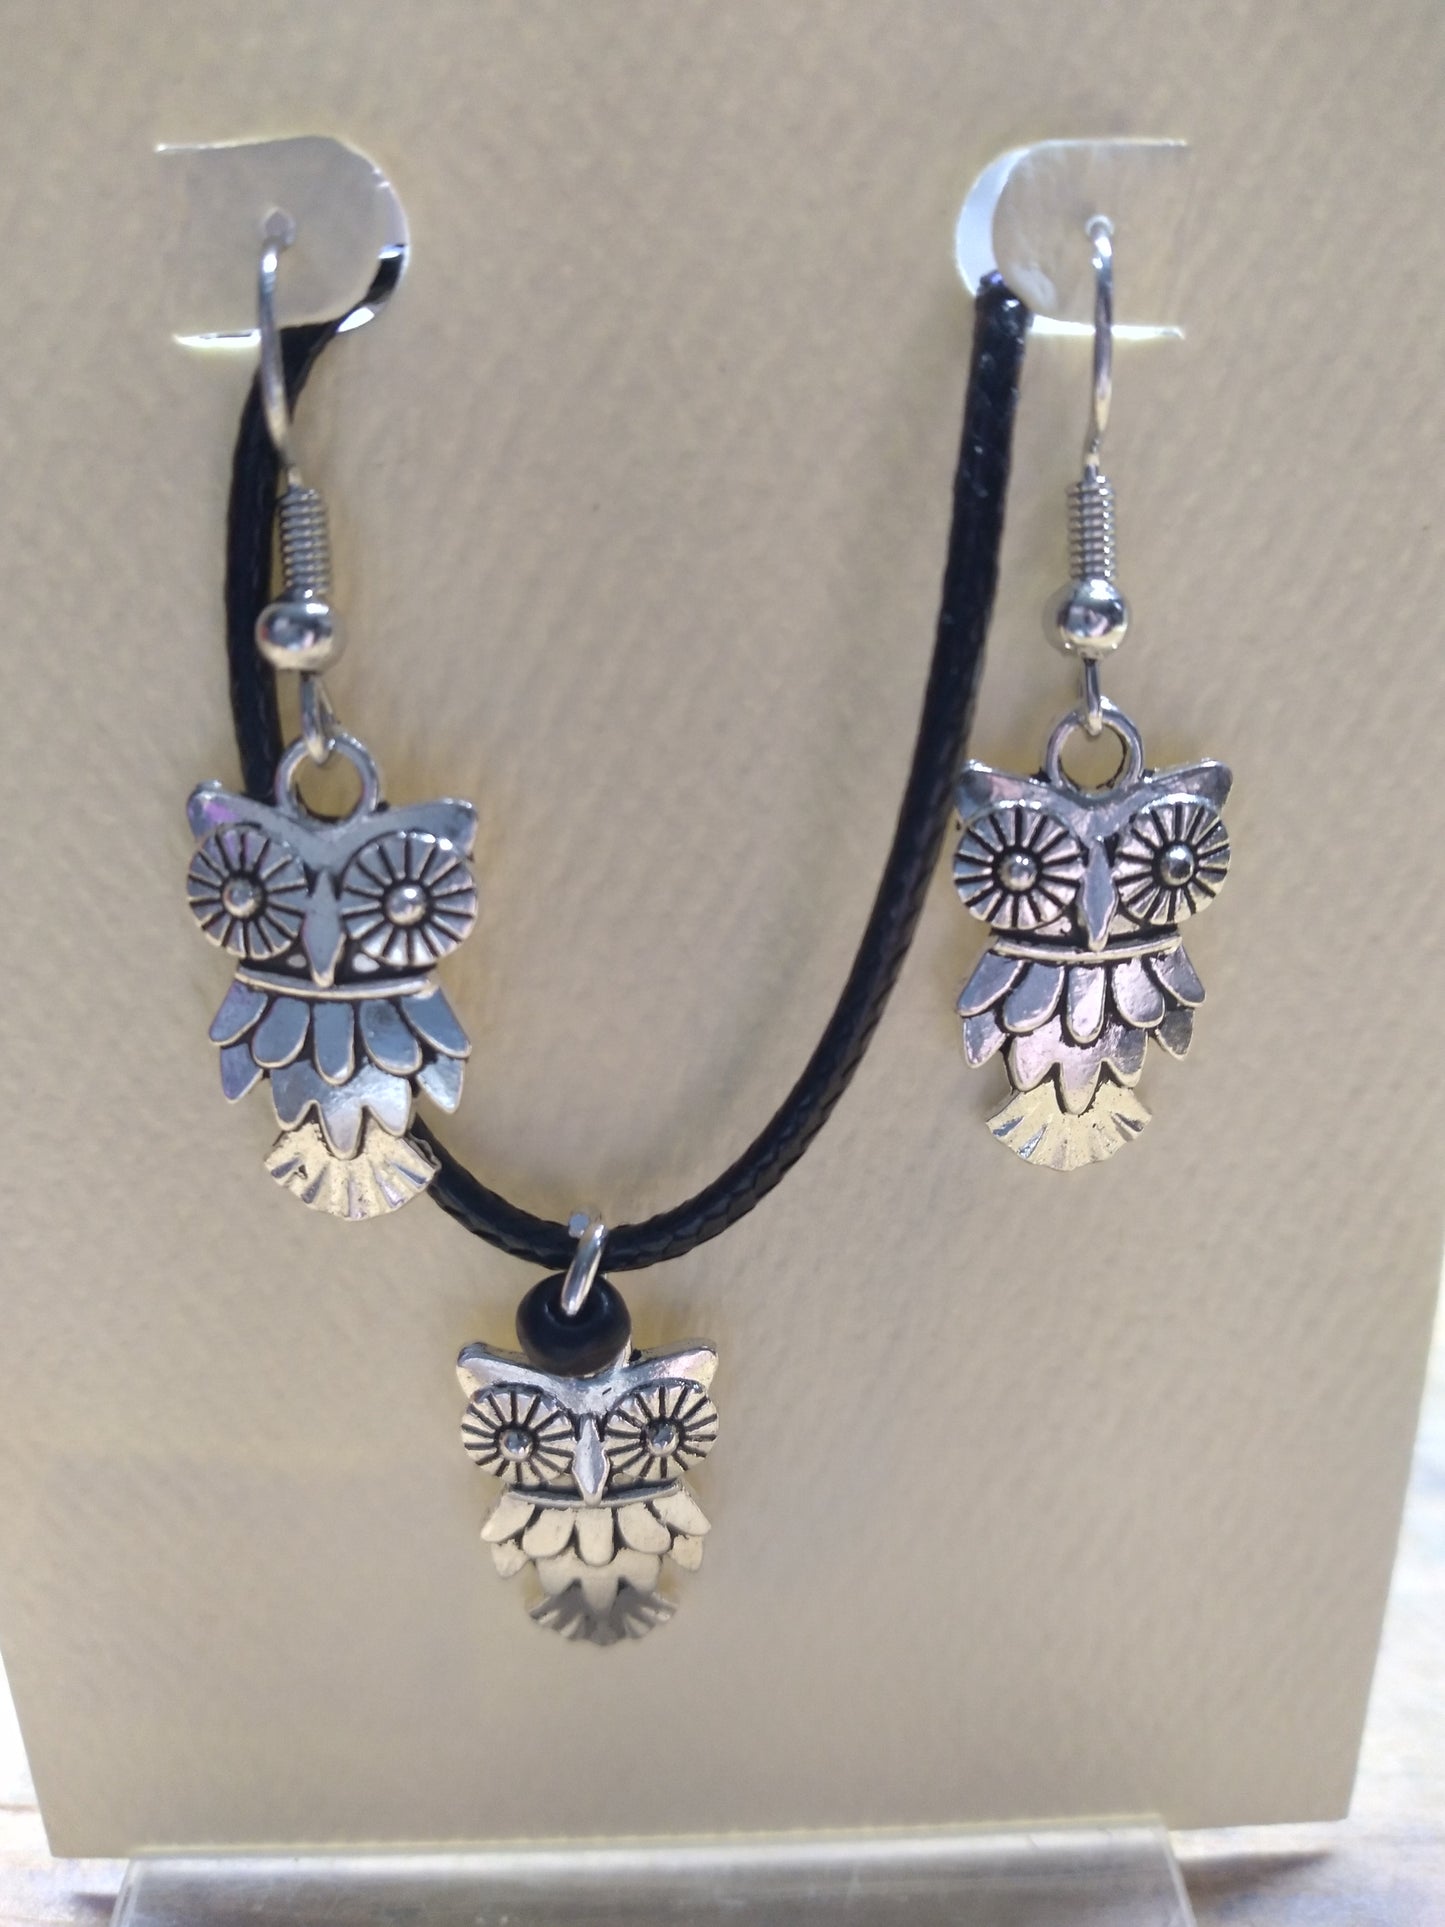 Pendant and Earrings set, Silver tone Owl